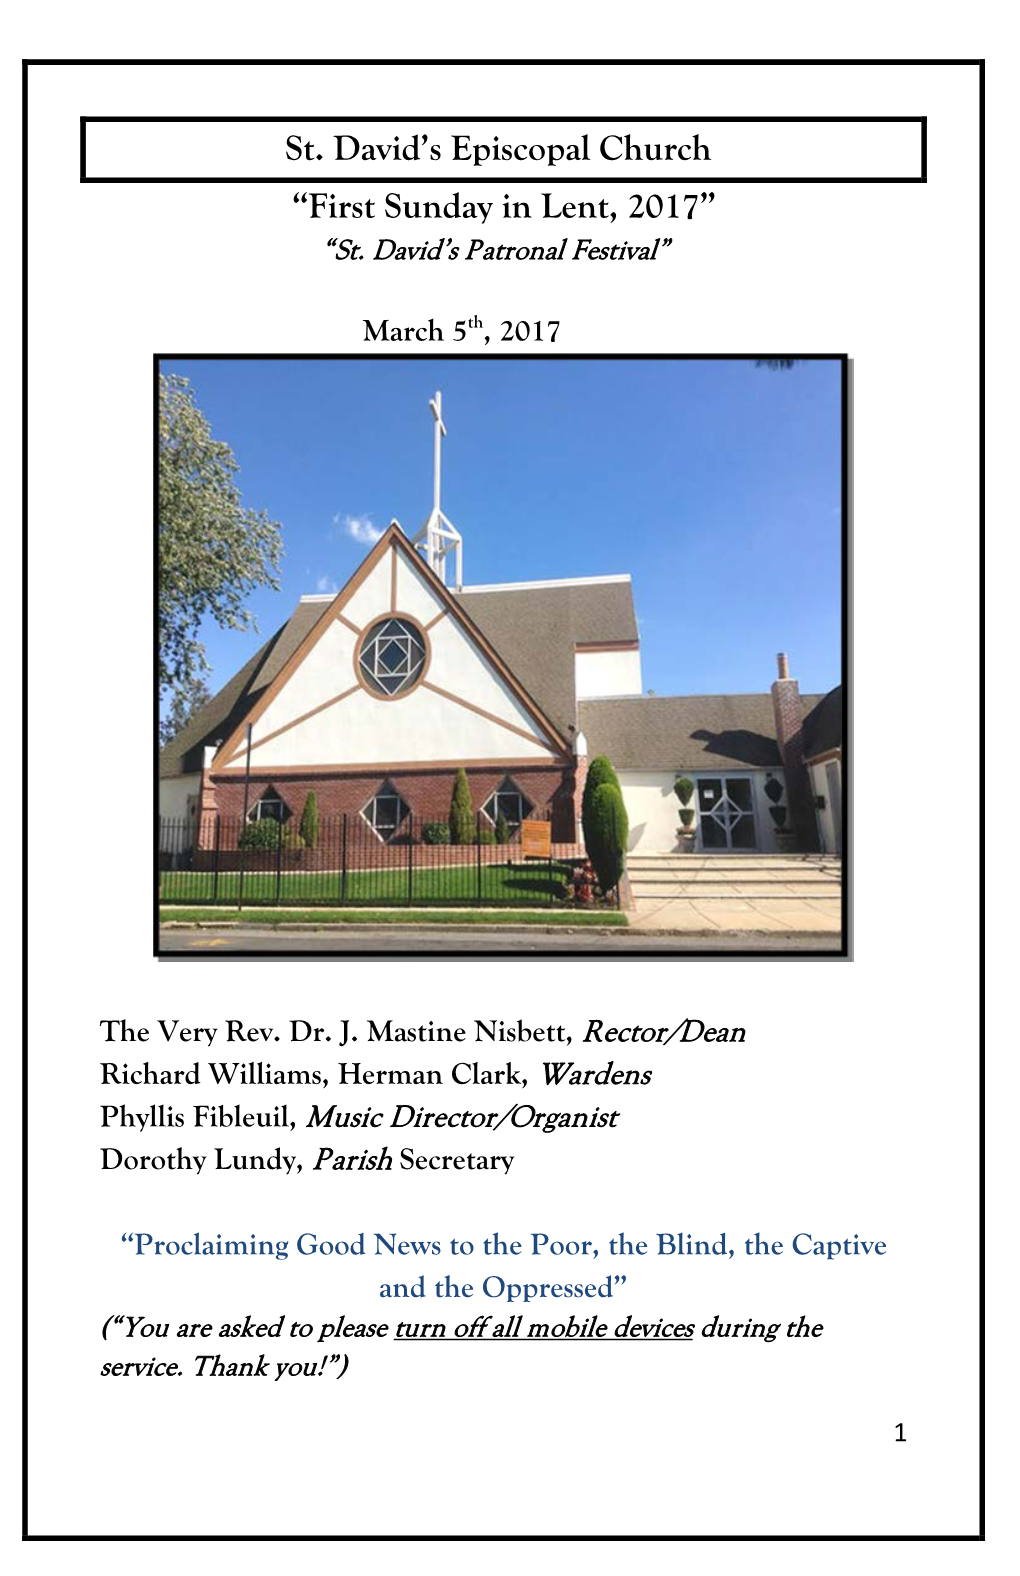 St. David's Episcopal Church “First Sunday in Lent, 2017”